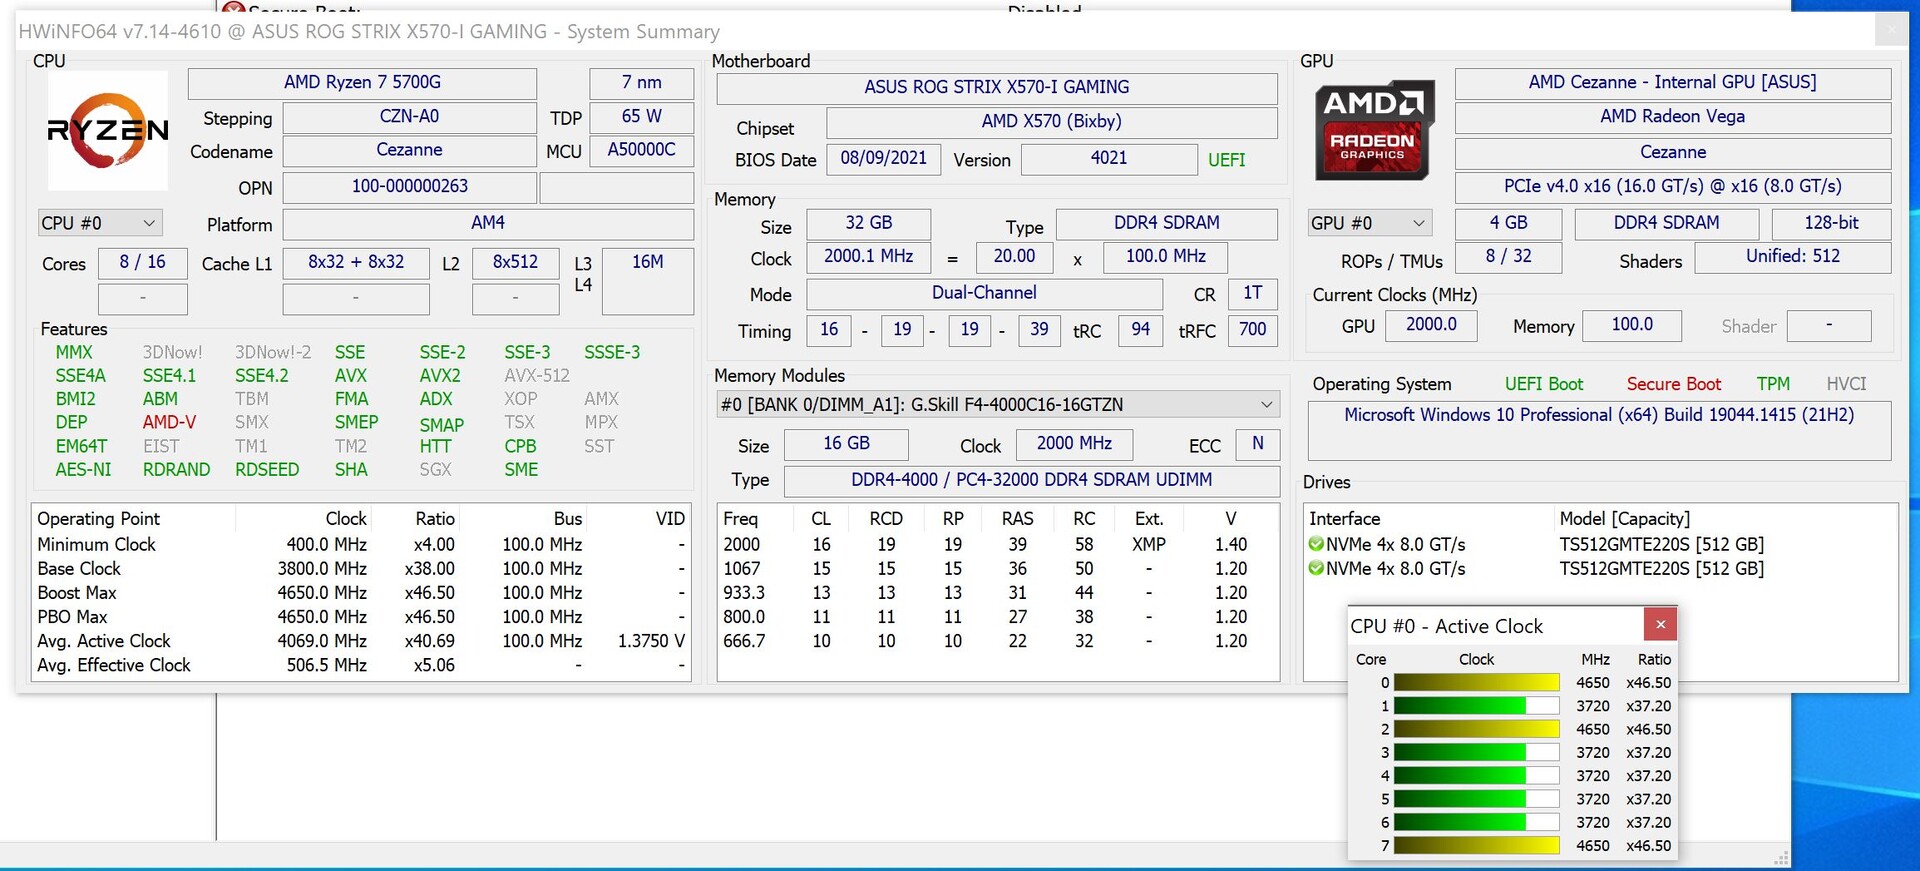 AMD Ryzen 7 5700G Socket Am4 3.8GHz with Radeon Vega 8 Processor